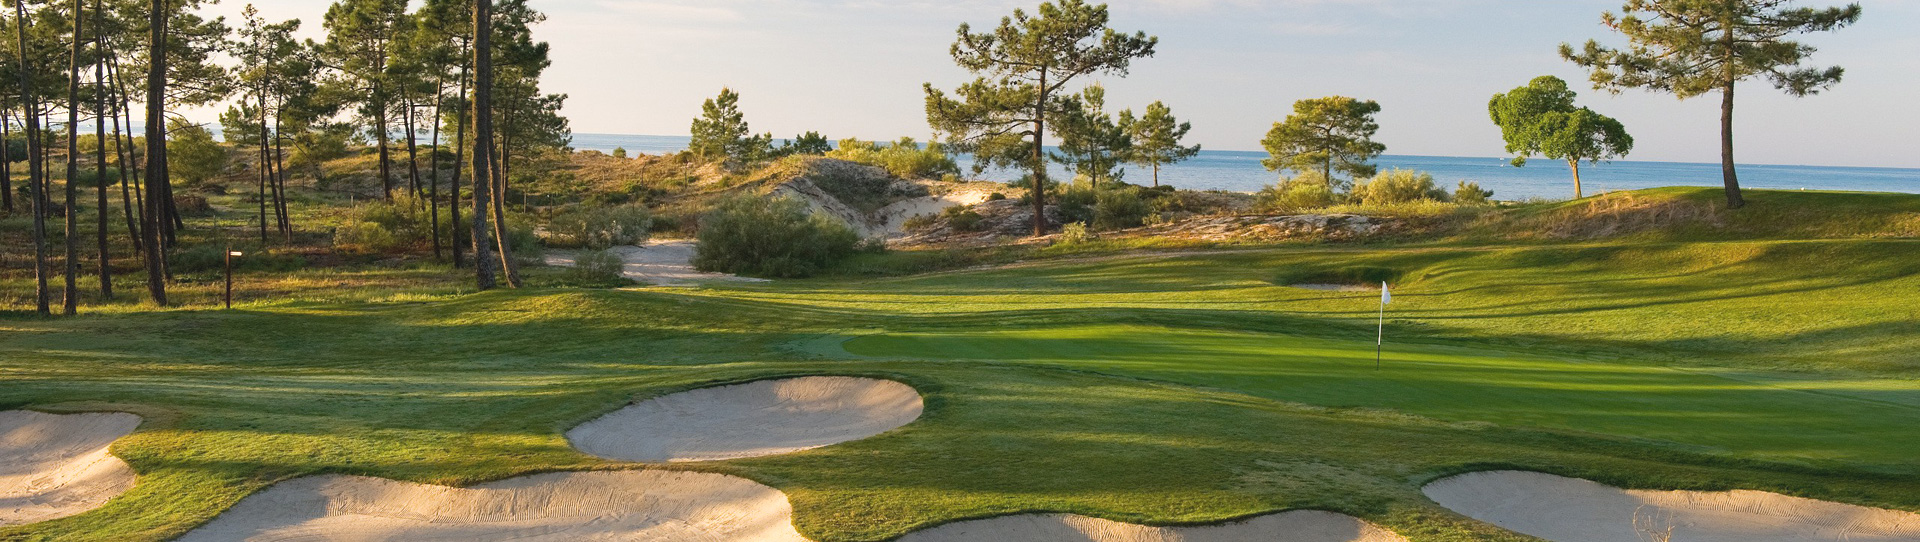 Portugal golf courses - Troia Golf Course - Photo 2